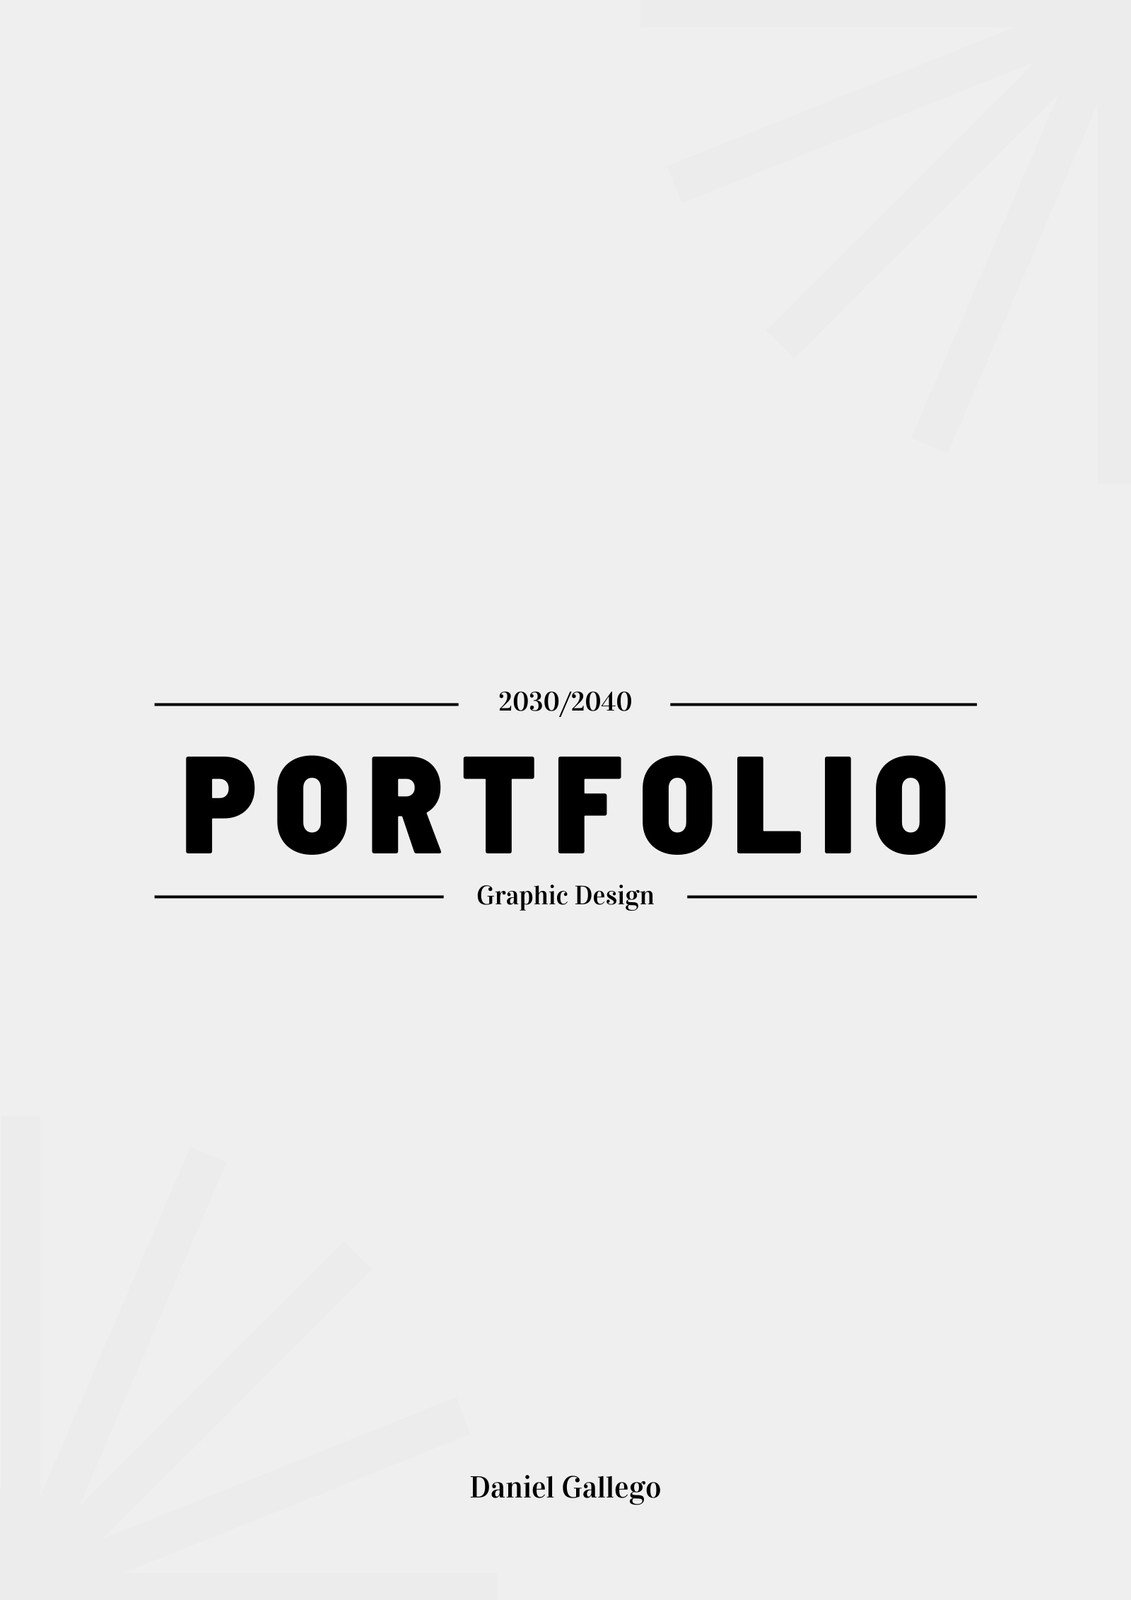 Art portfolio cover